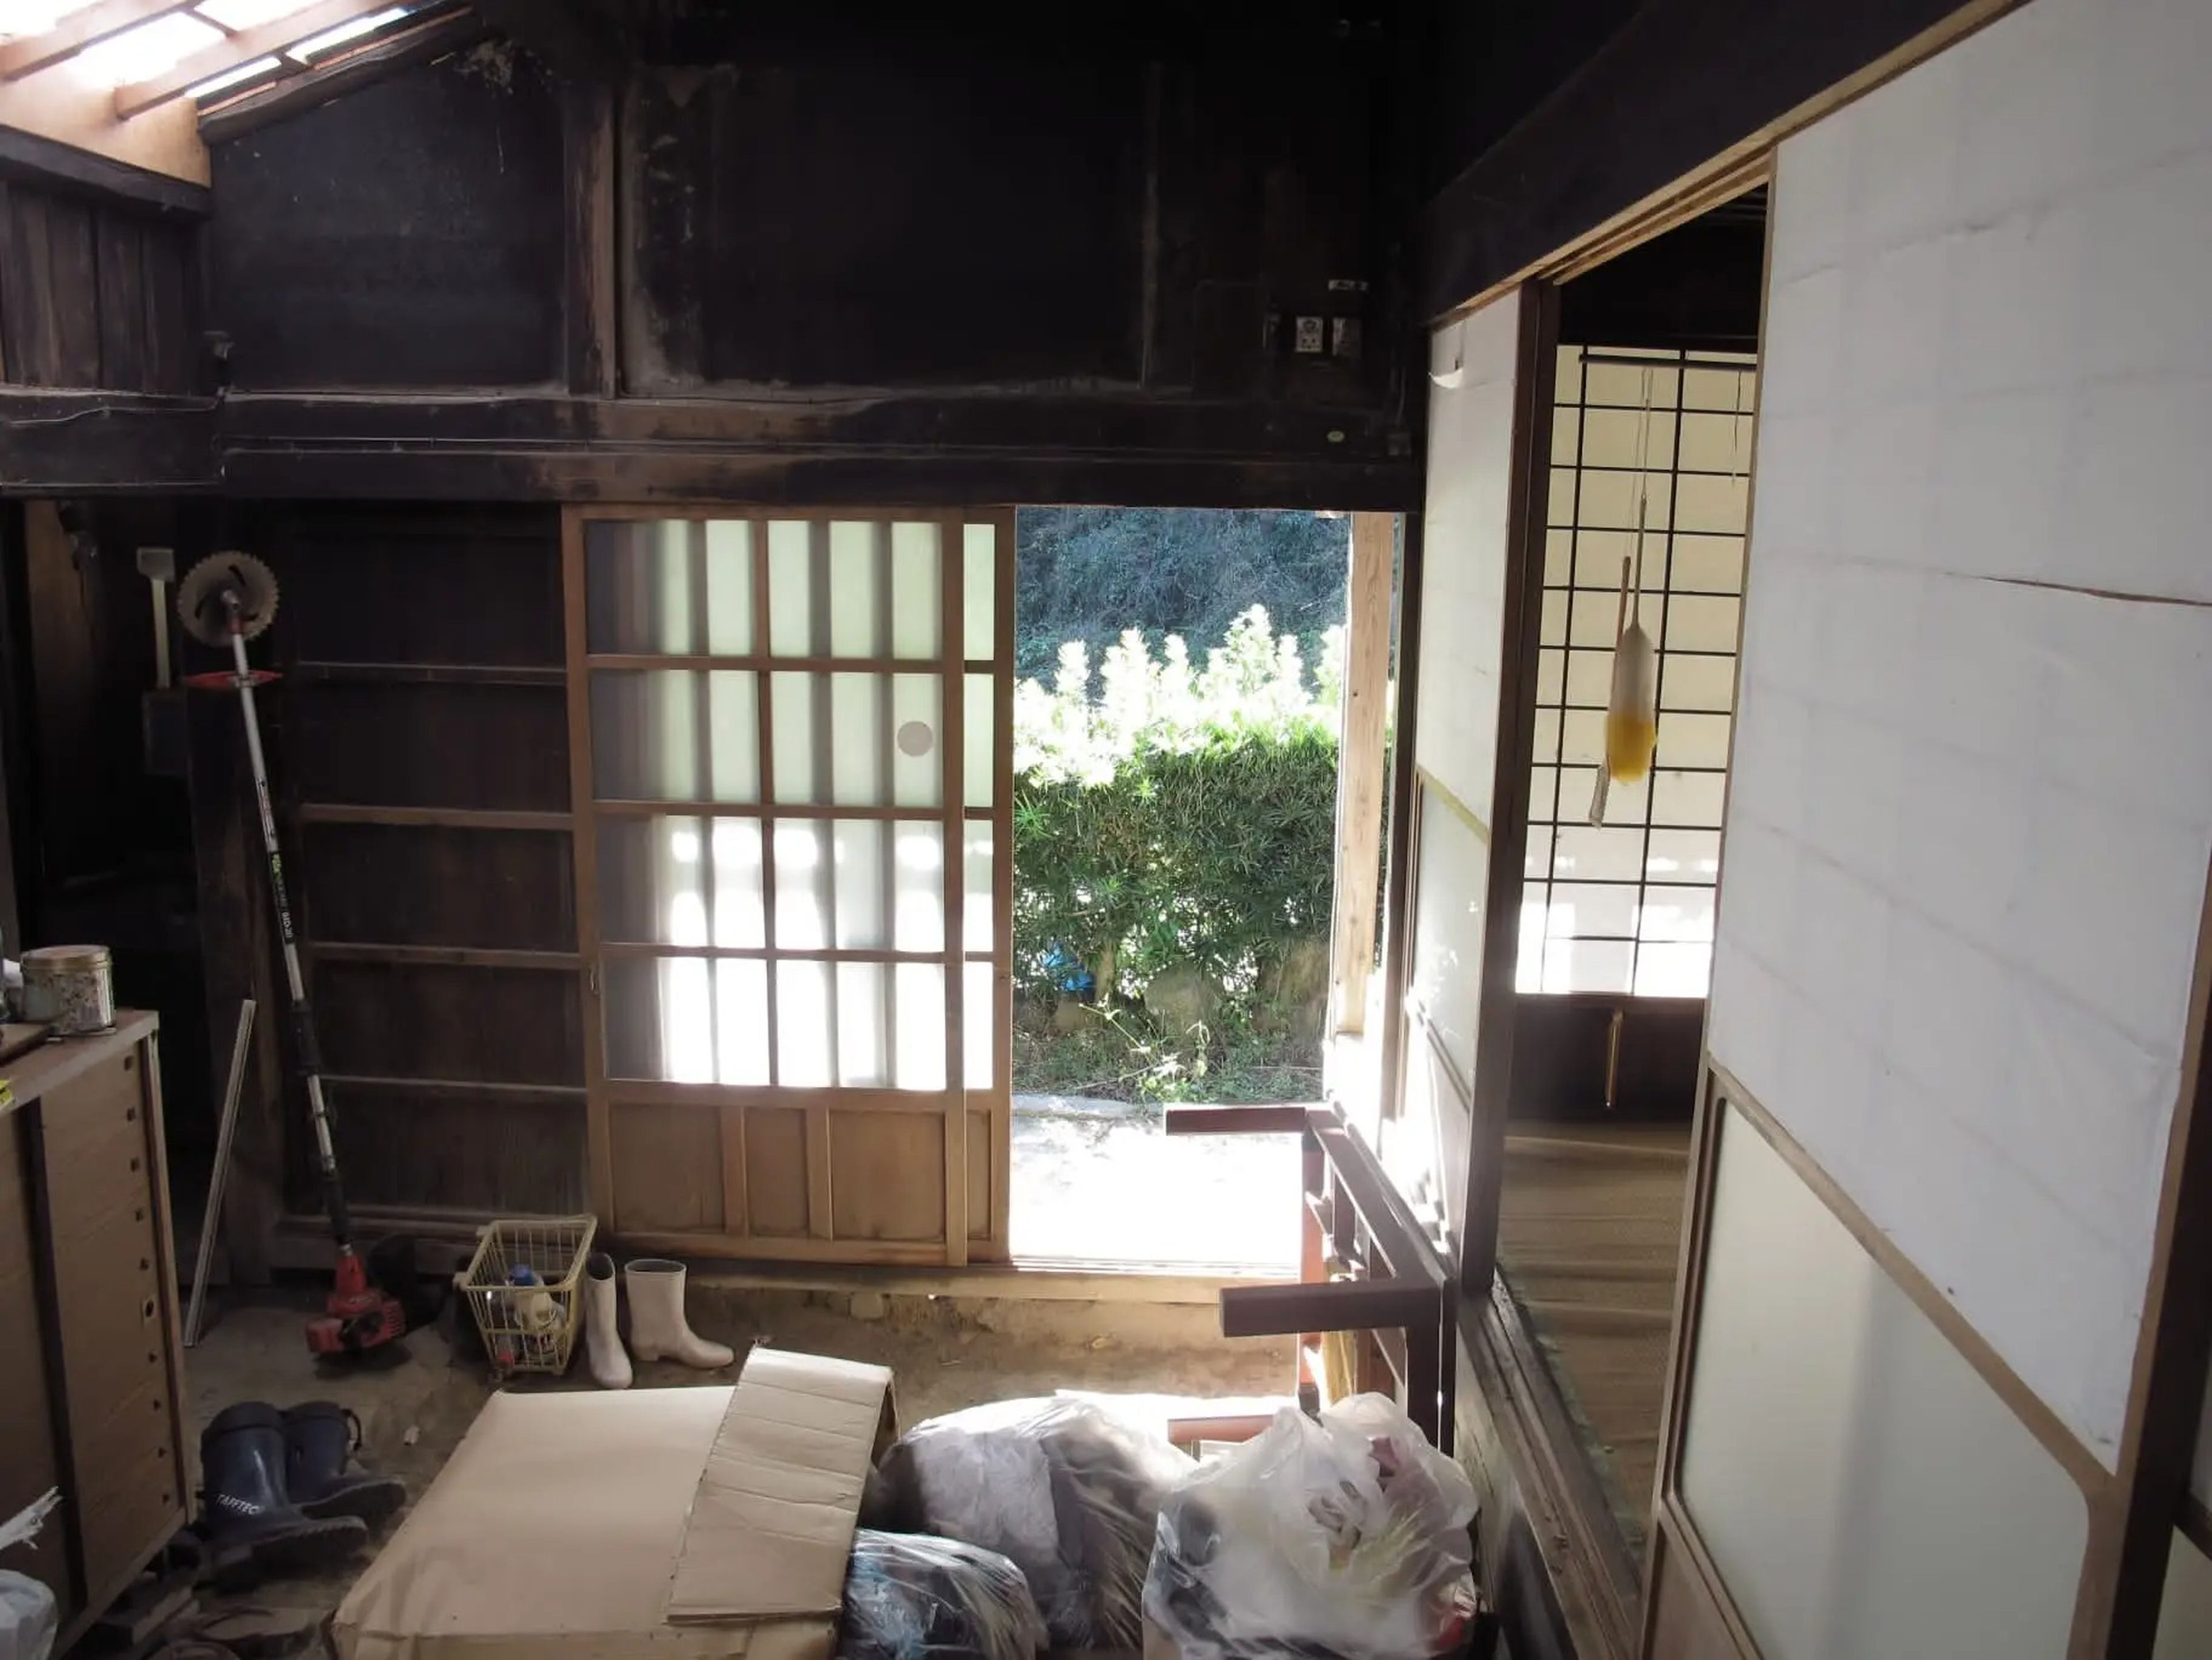 The interiors of the Ryokan.